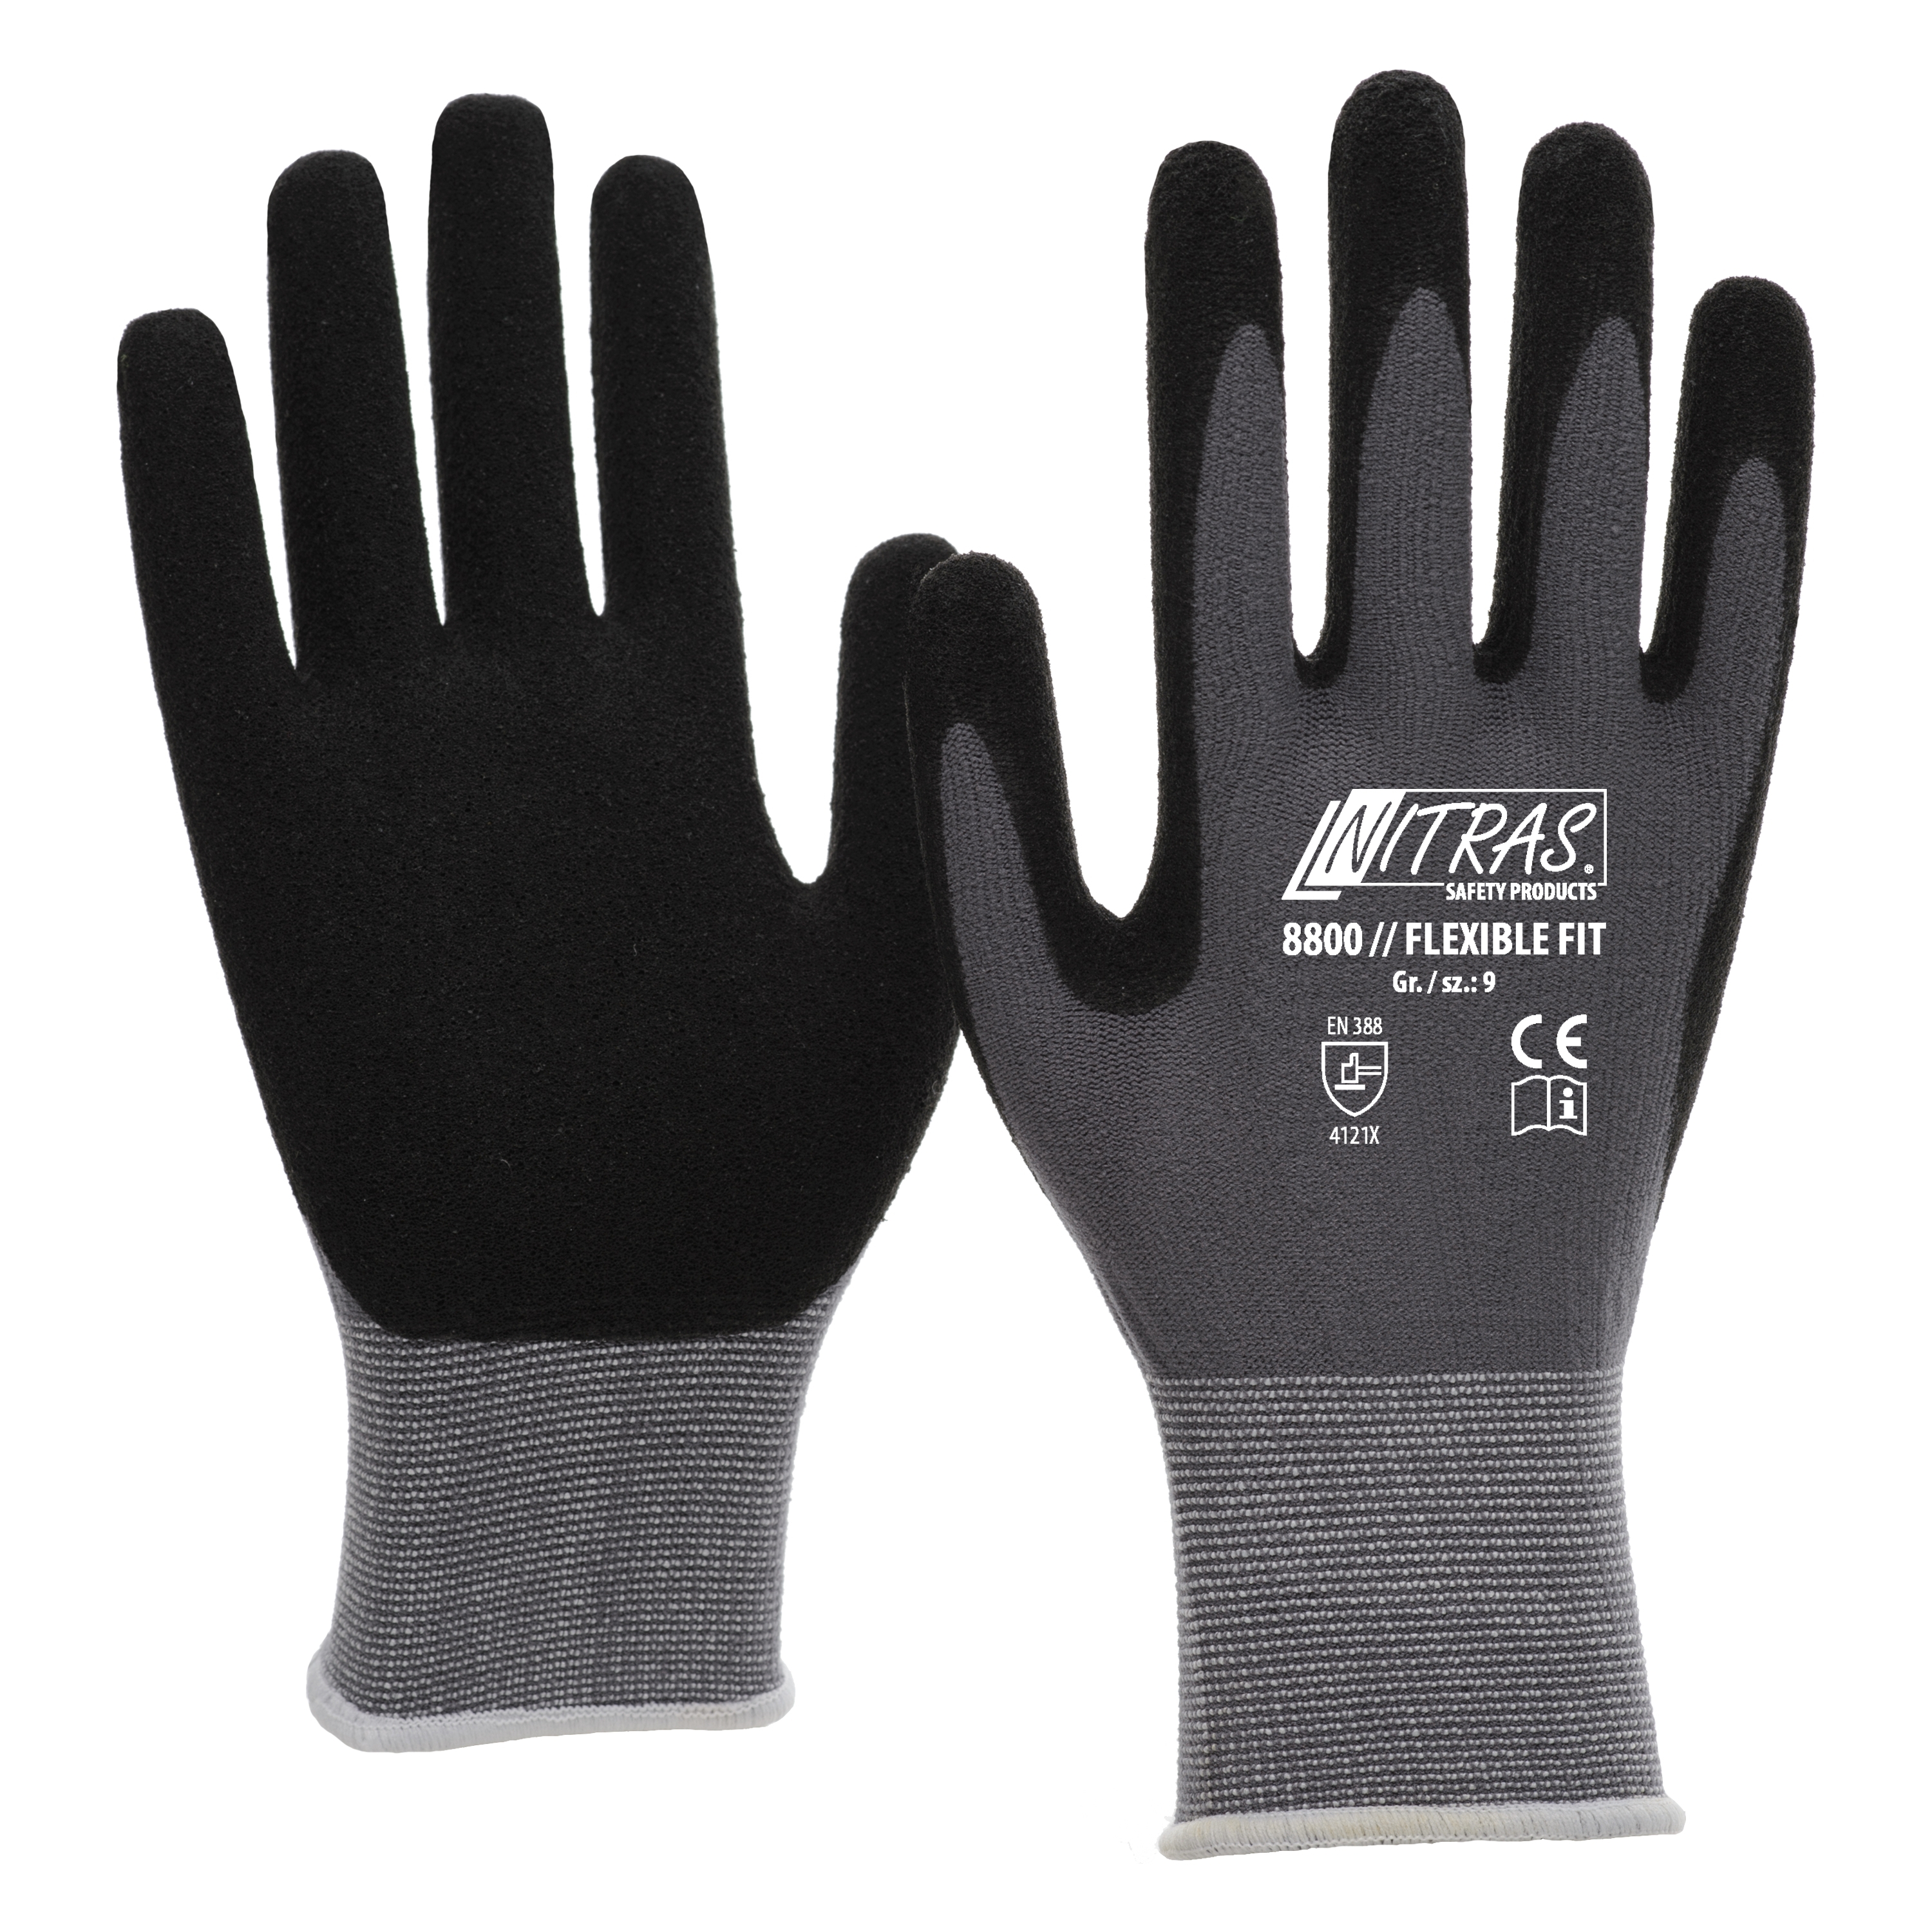 Handschuhe "Nitras Flexible Fit", schwarz